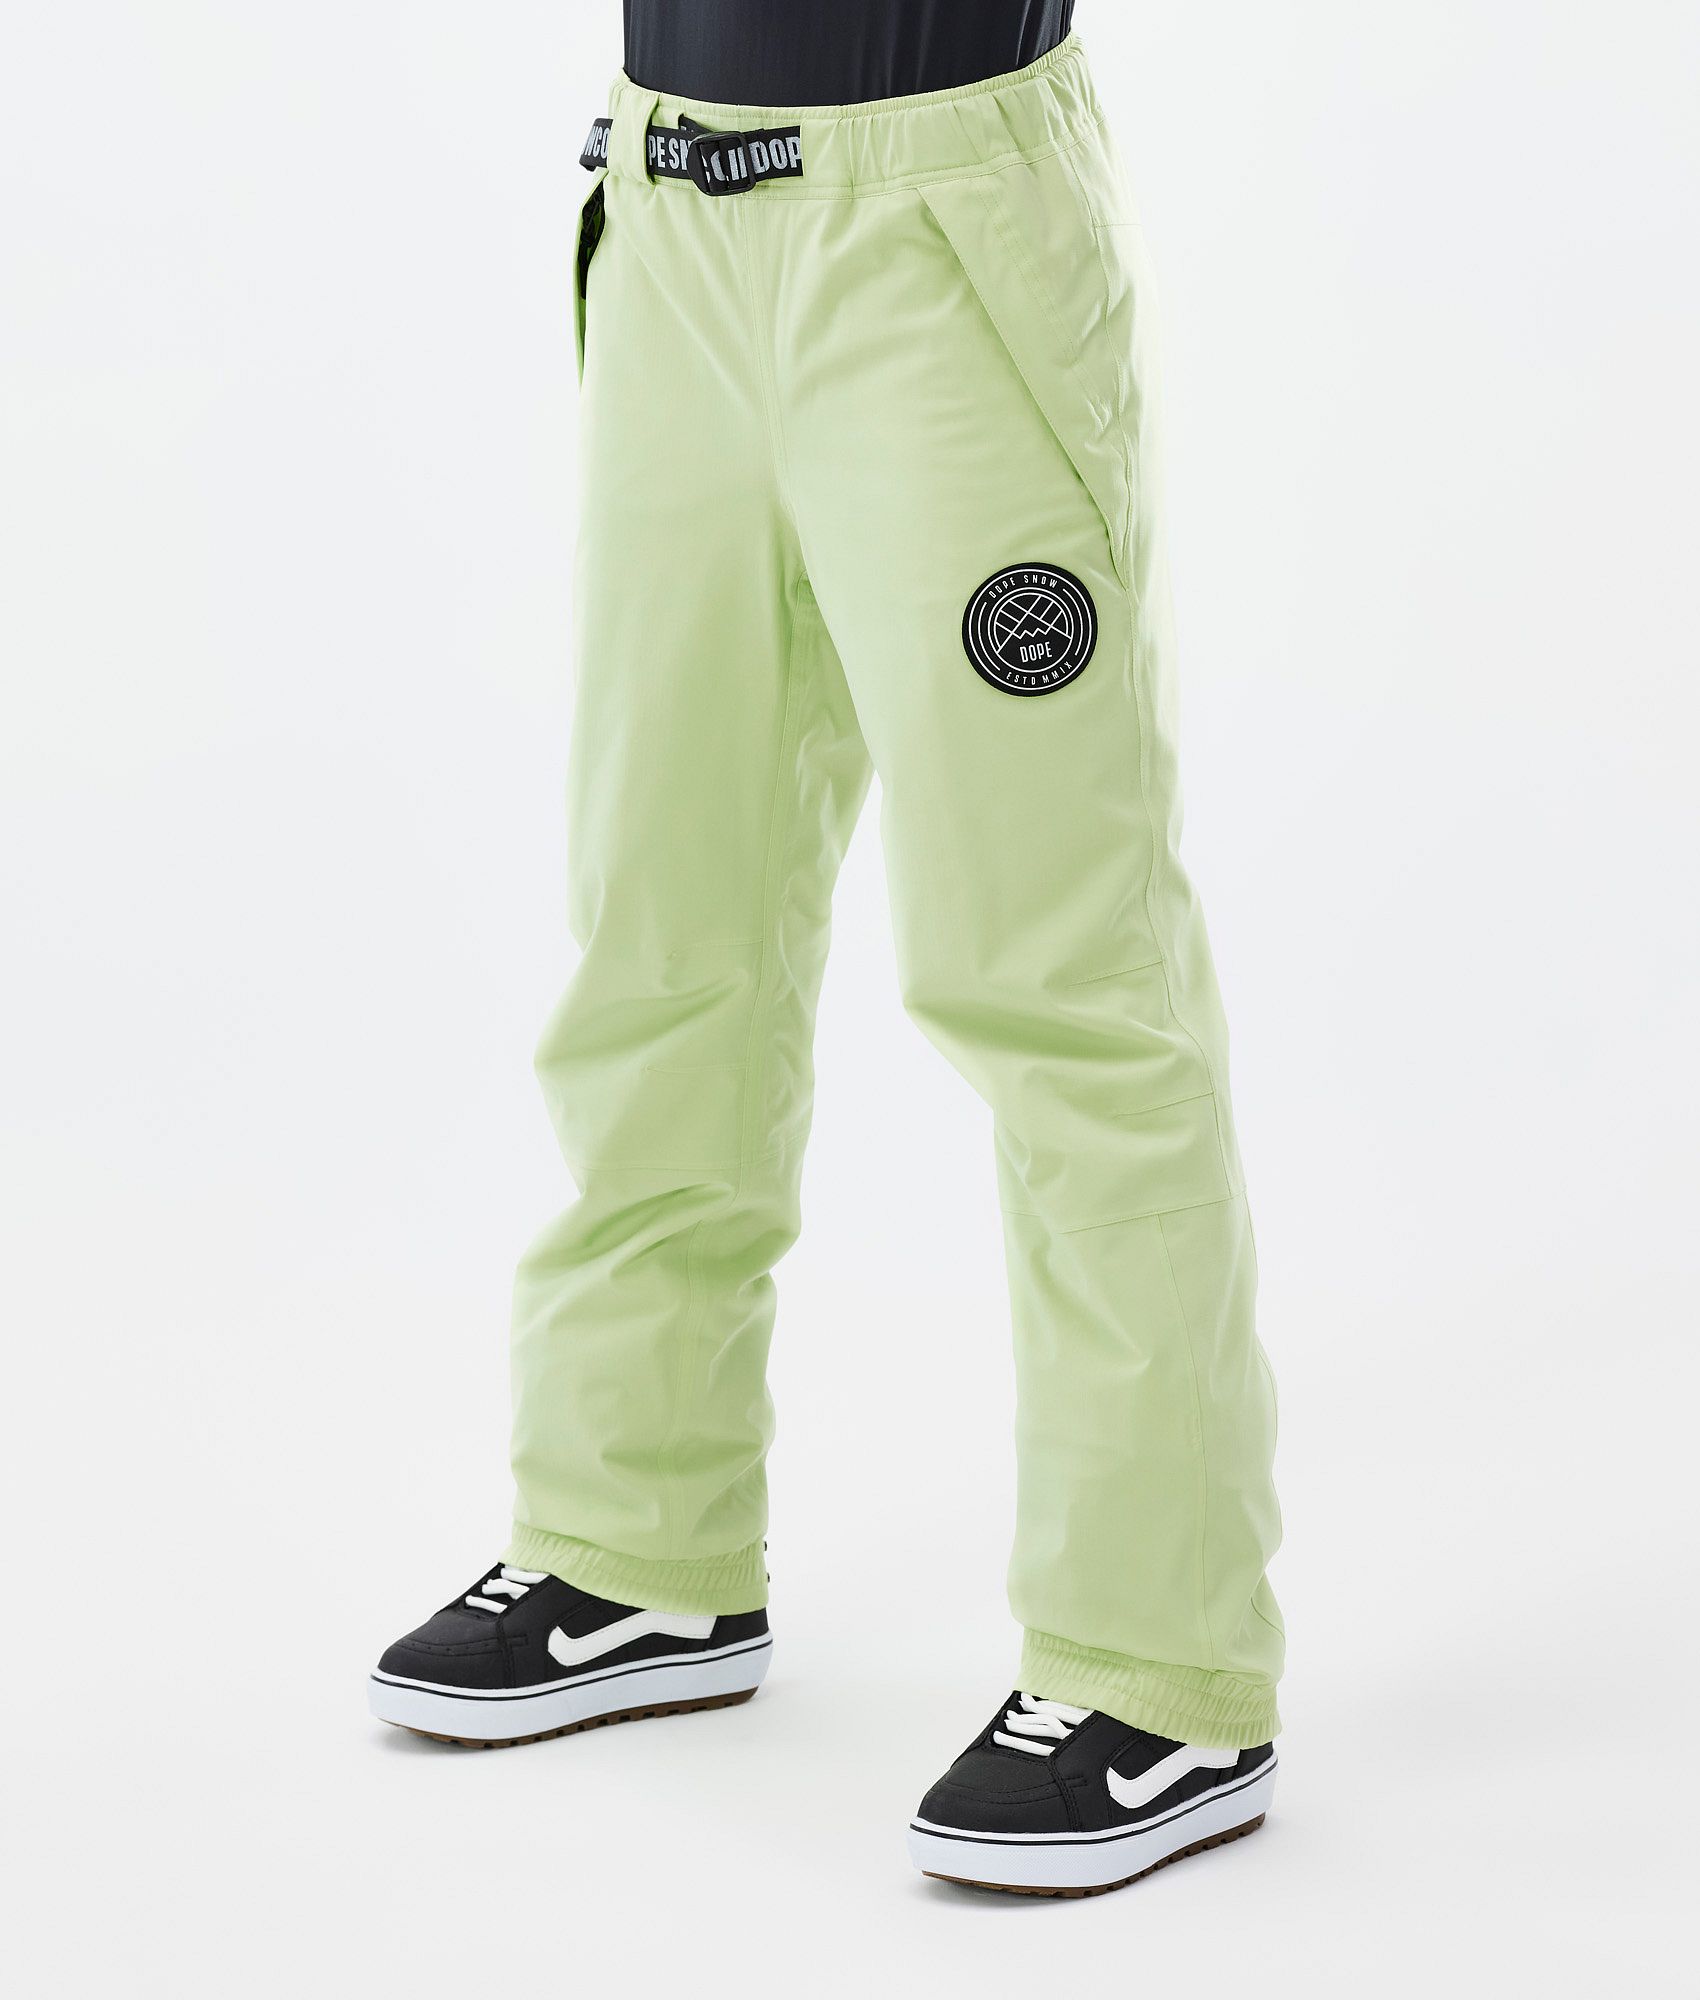 ALWAYS Women's Super Soft Casual Cargo Jogger Pants Neon Lime M -  Walmart.com